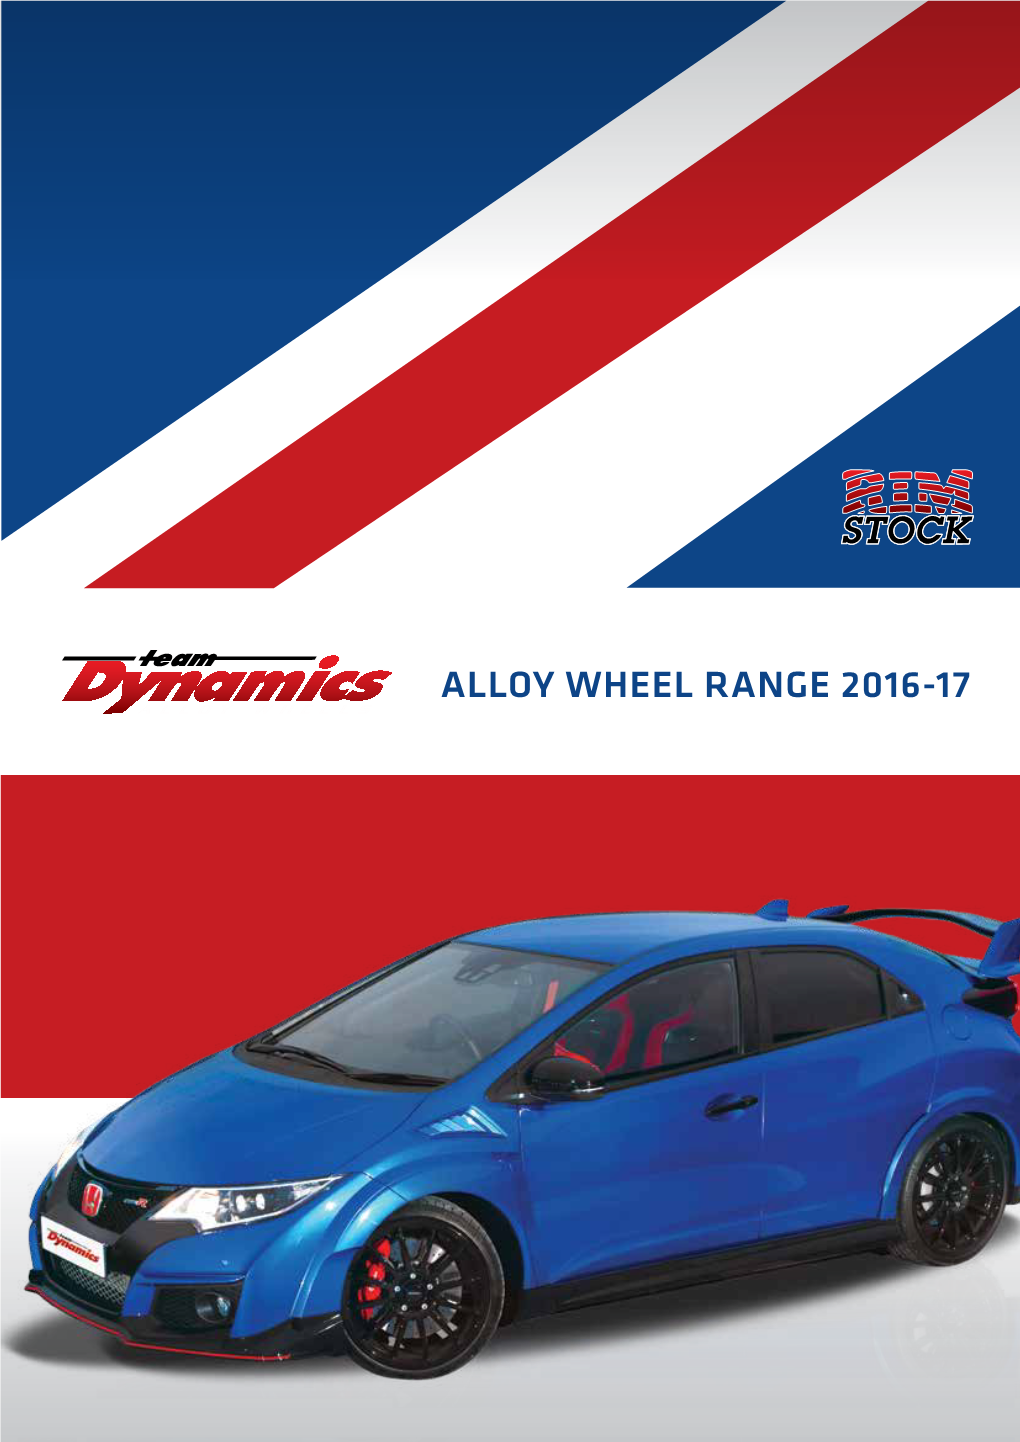 Alloy Wheel Range 2016-17